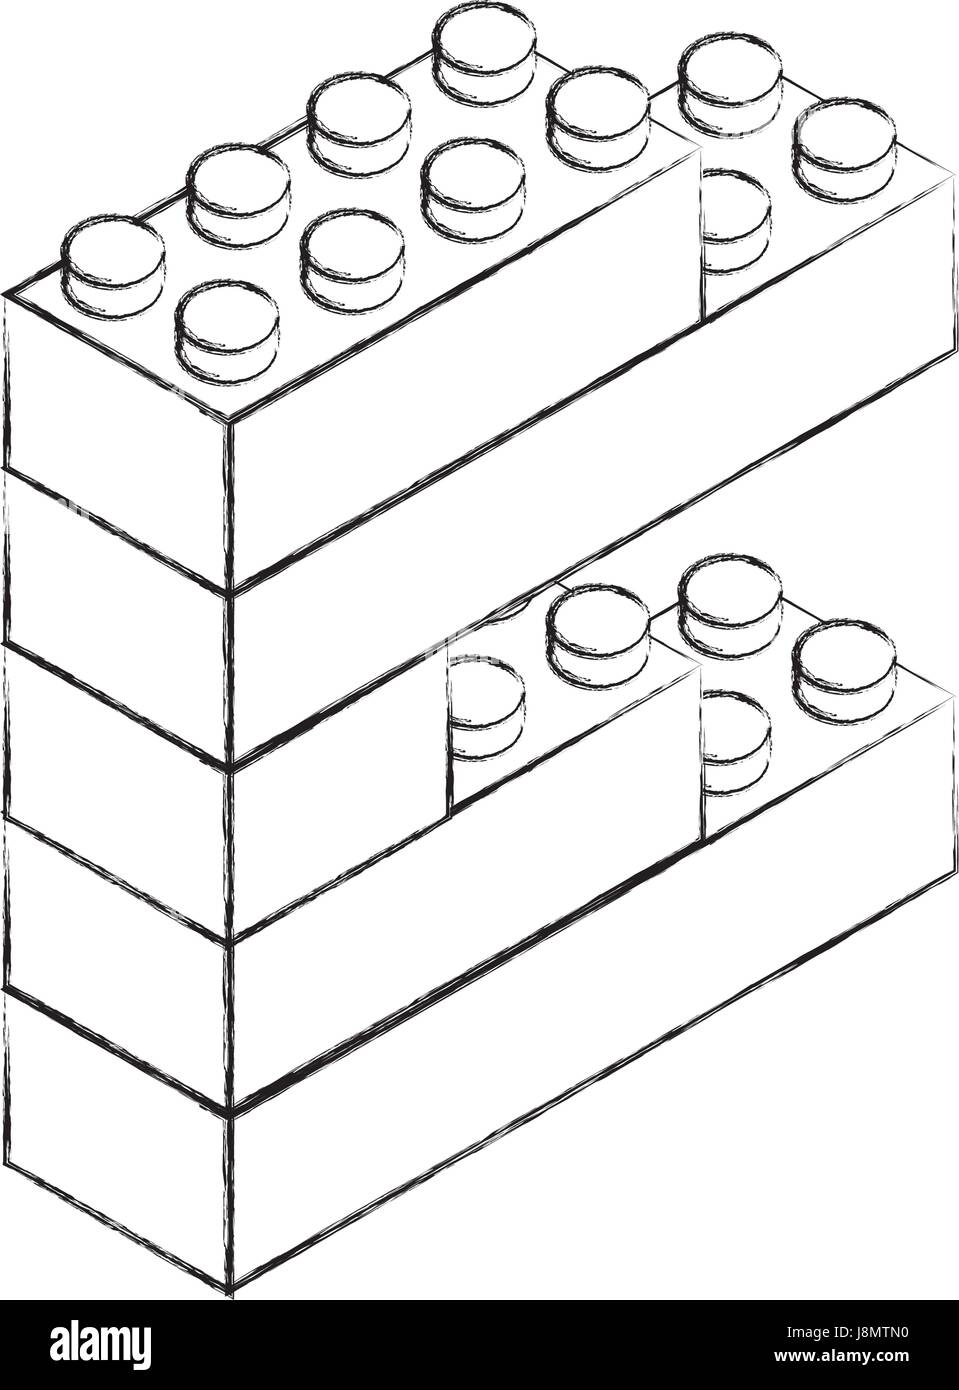 Skizze zu zeichnen Spielzeug Baustein Ziegel Stock-Vektorgrafik - Alamy